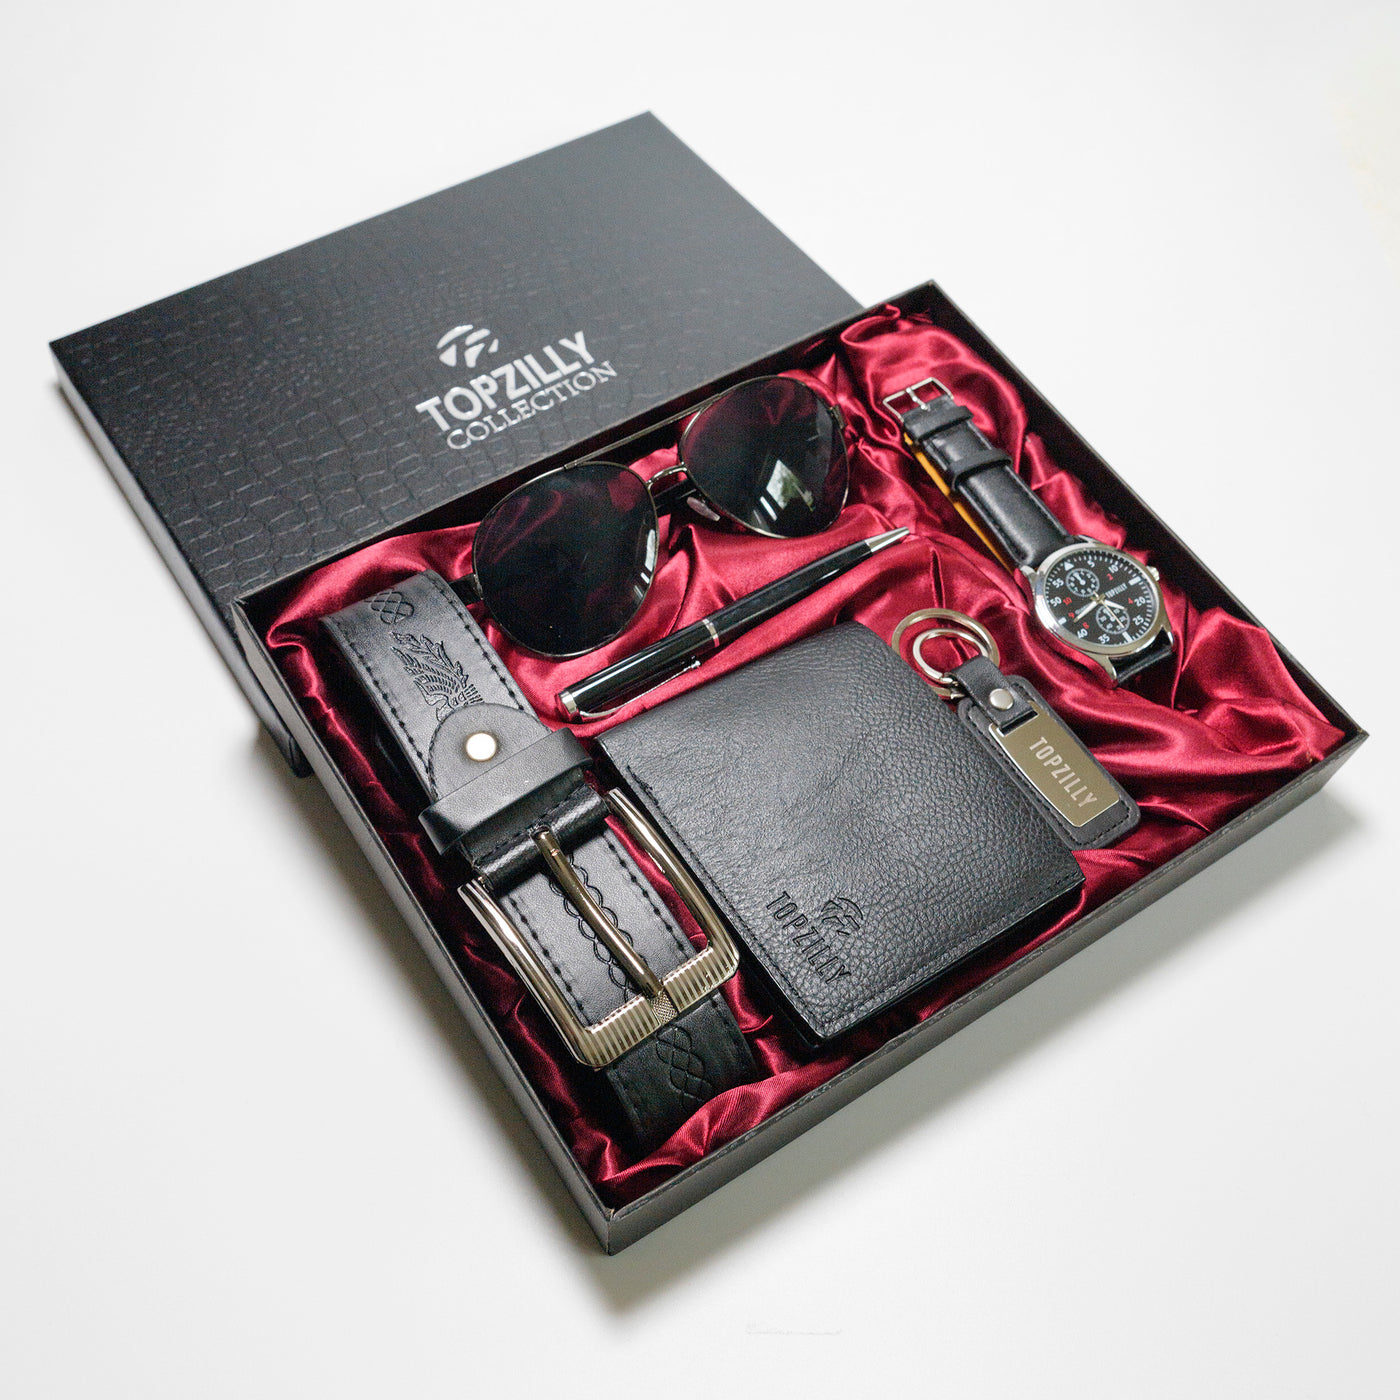 Topzilly Mens Luxury Gift Set Watch Wallet Keyring Sunglasses Belt